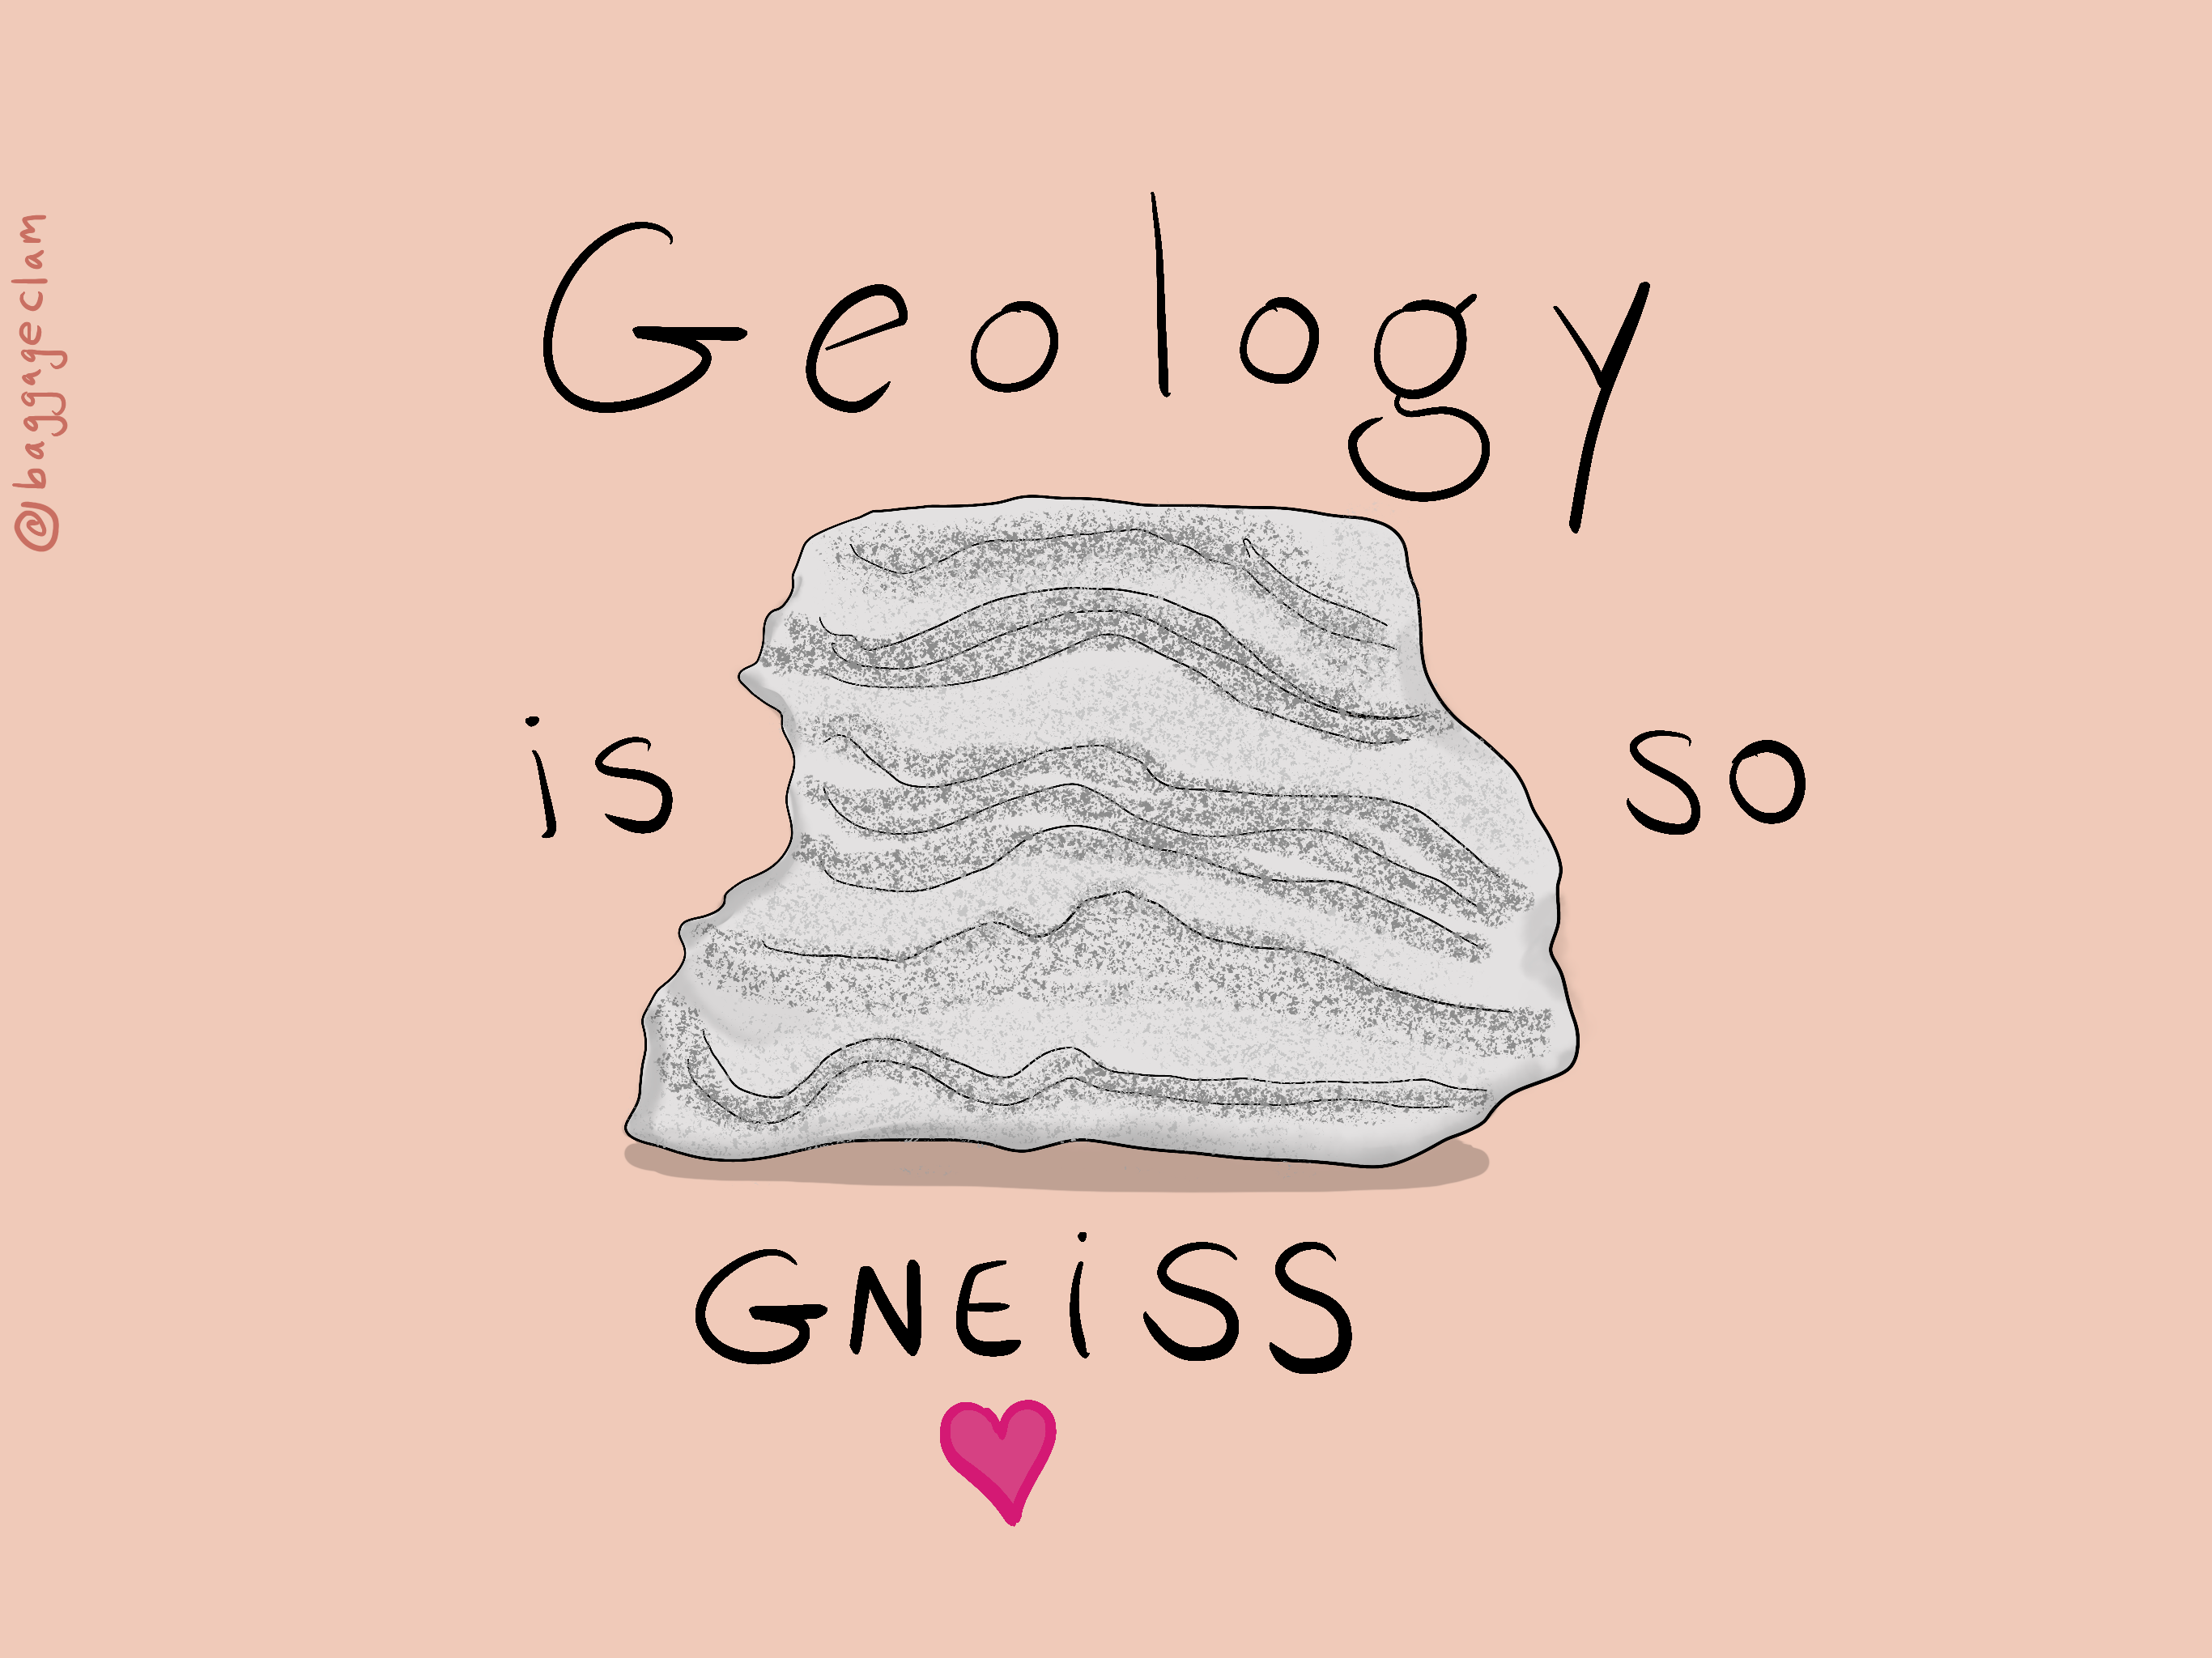 Geology - Gneiss